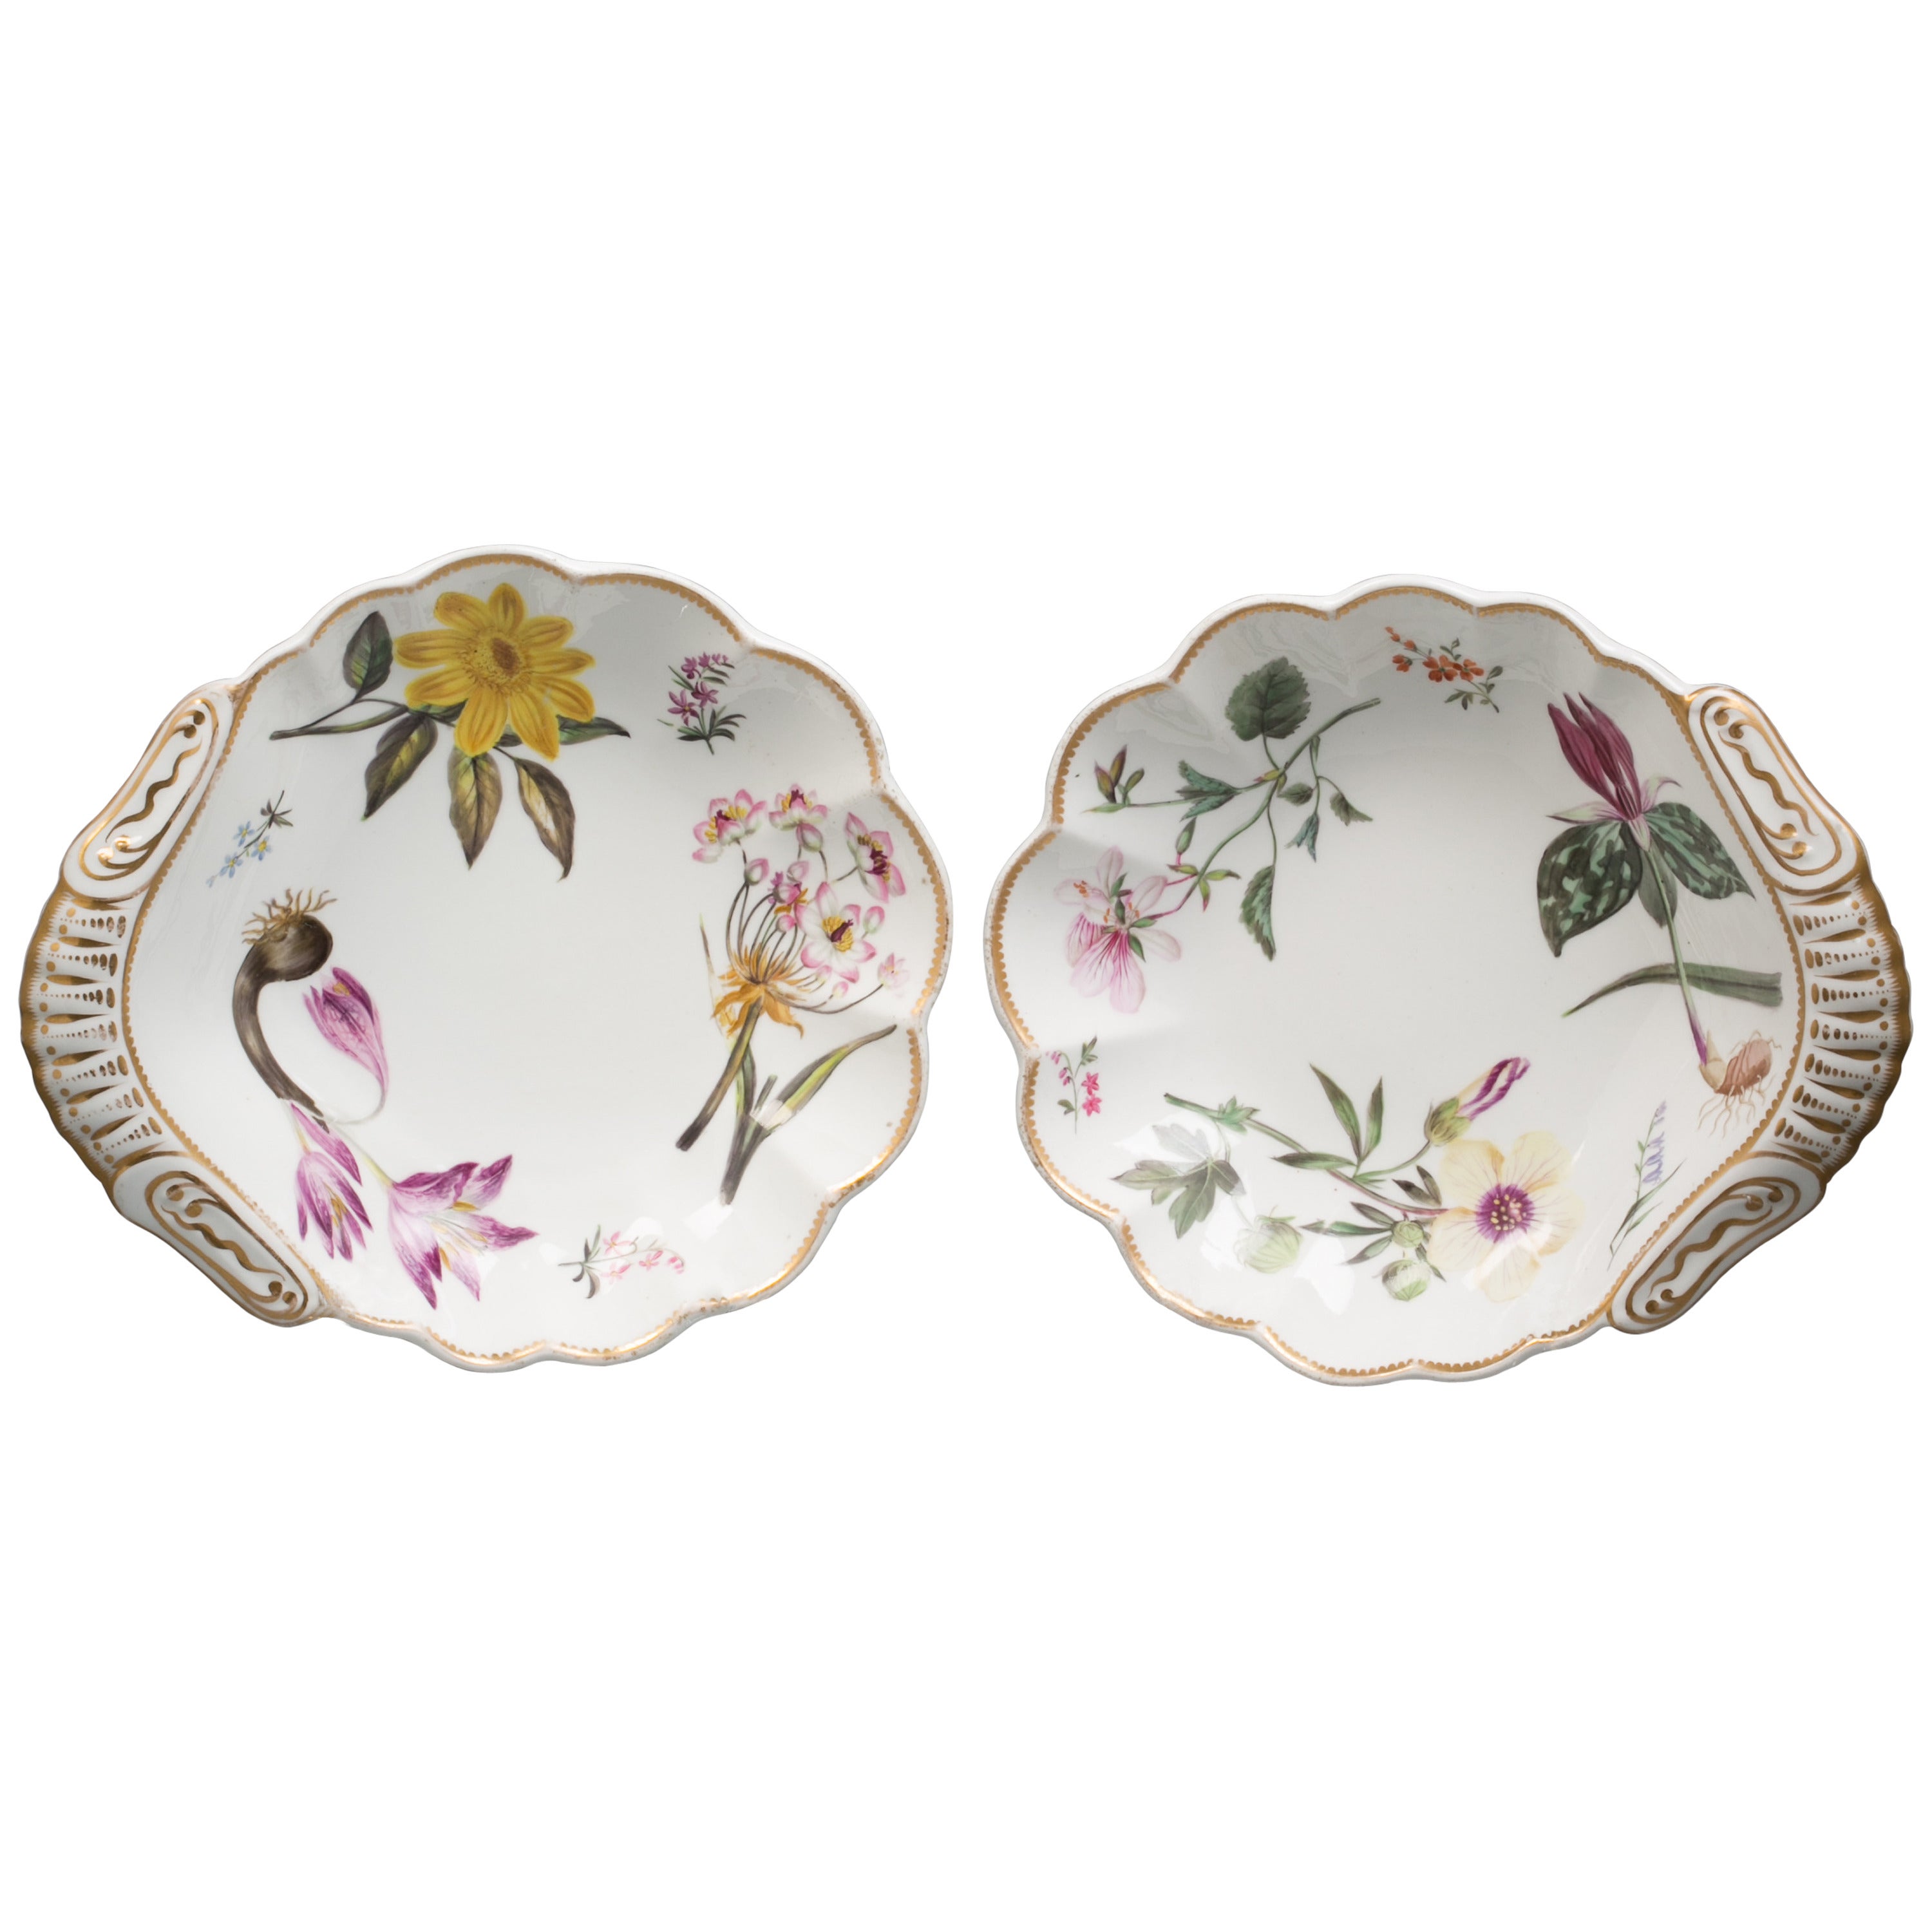 Pair of English Spode Porcelain Botanical Shell-Shape Dishes, circa 1820